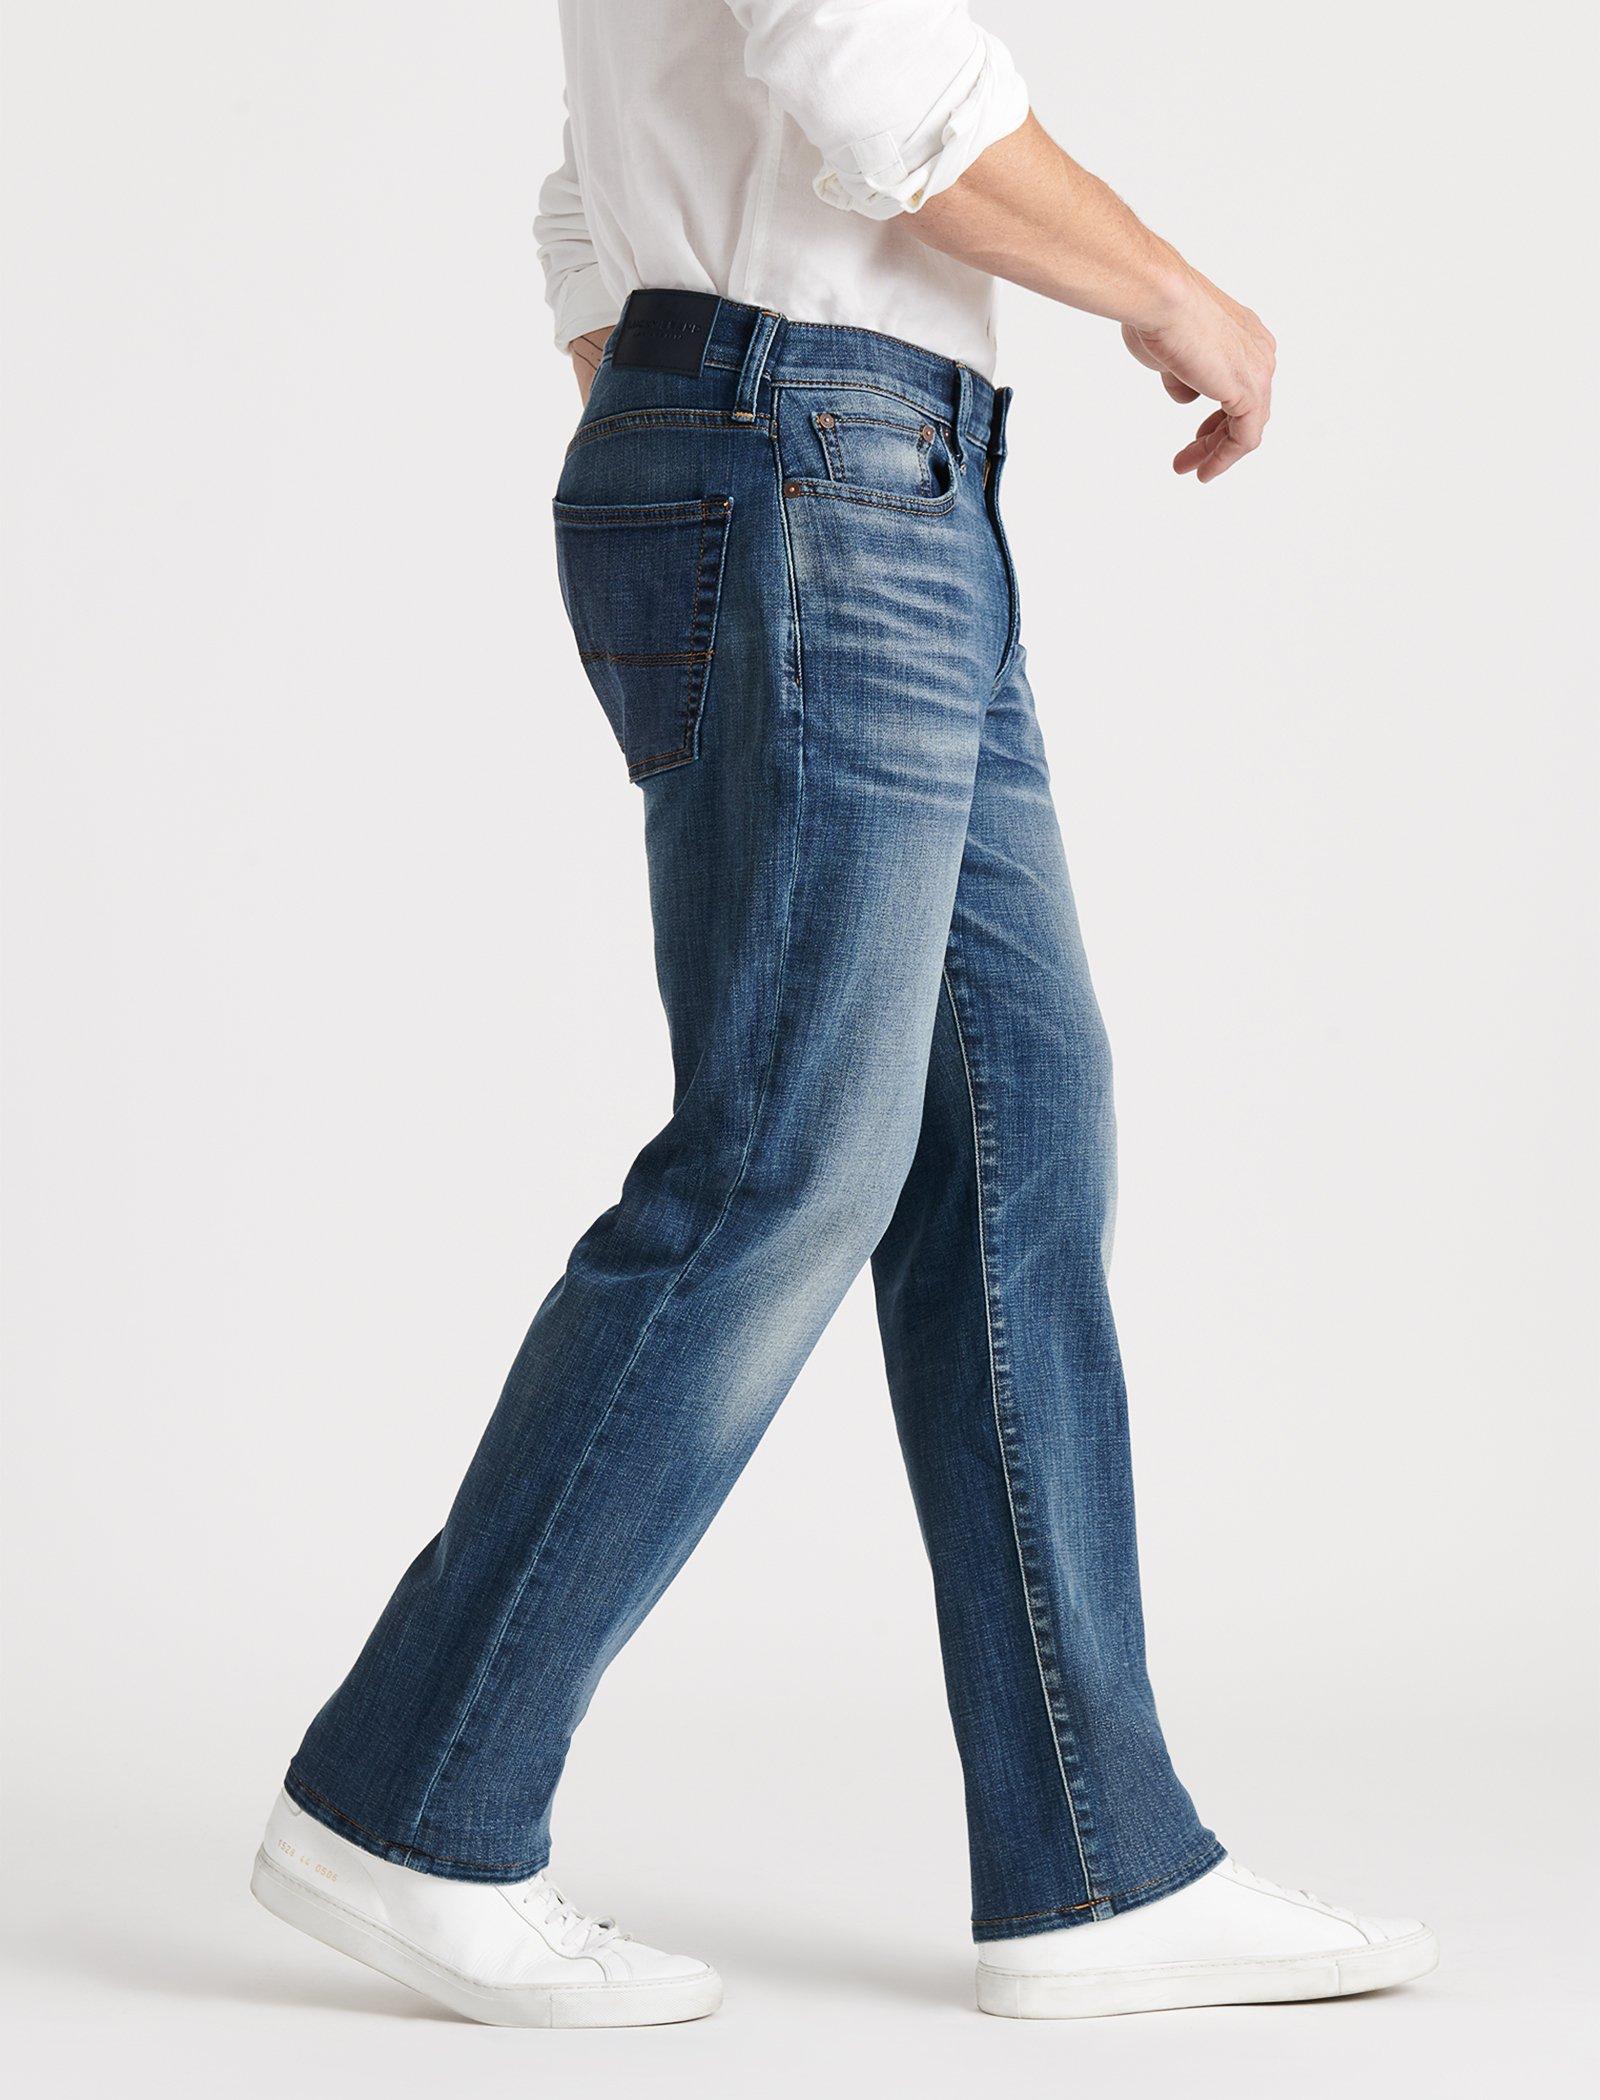 mens lucky jeans 221 original straight